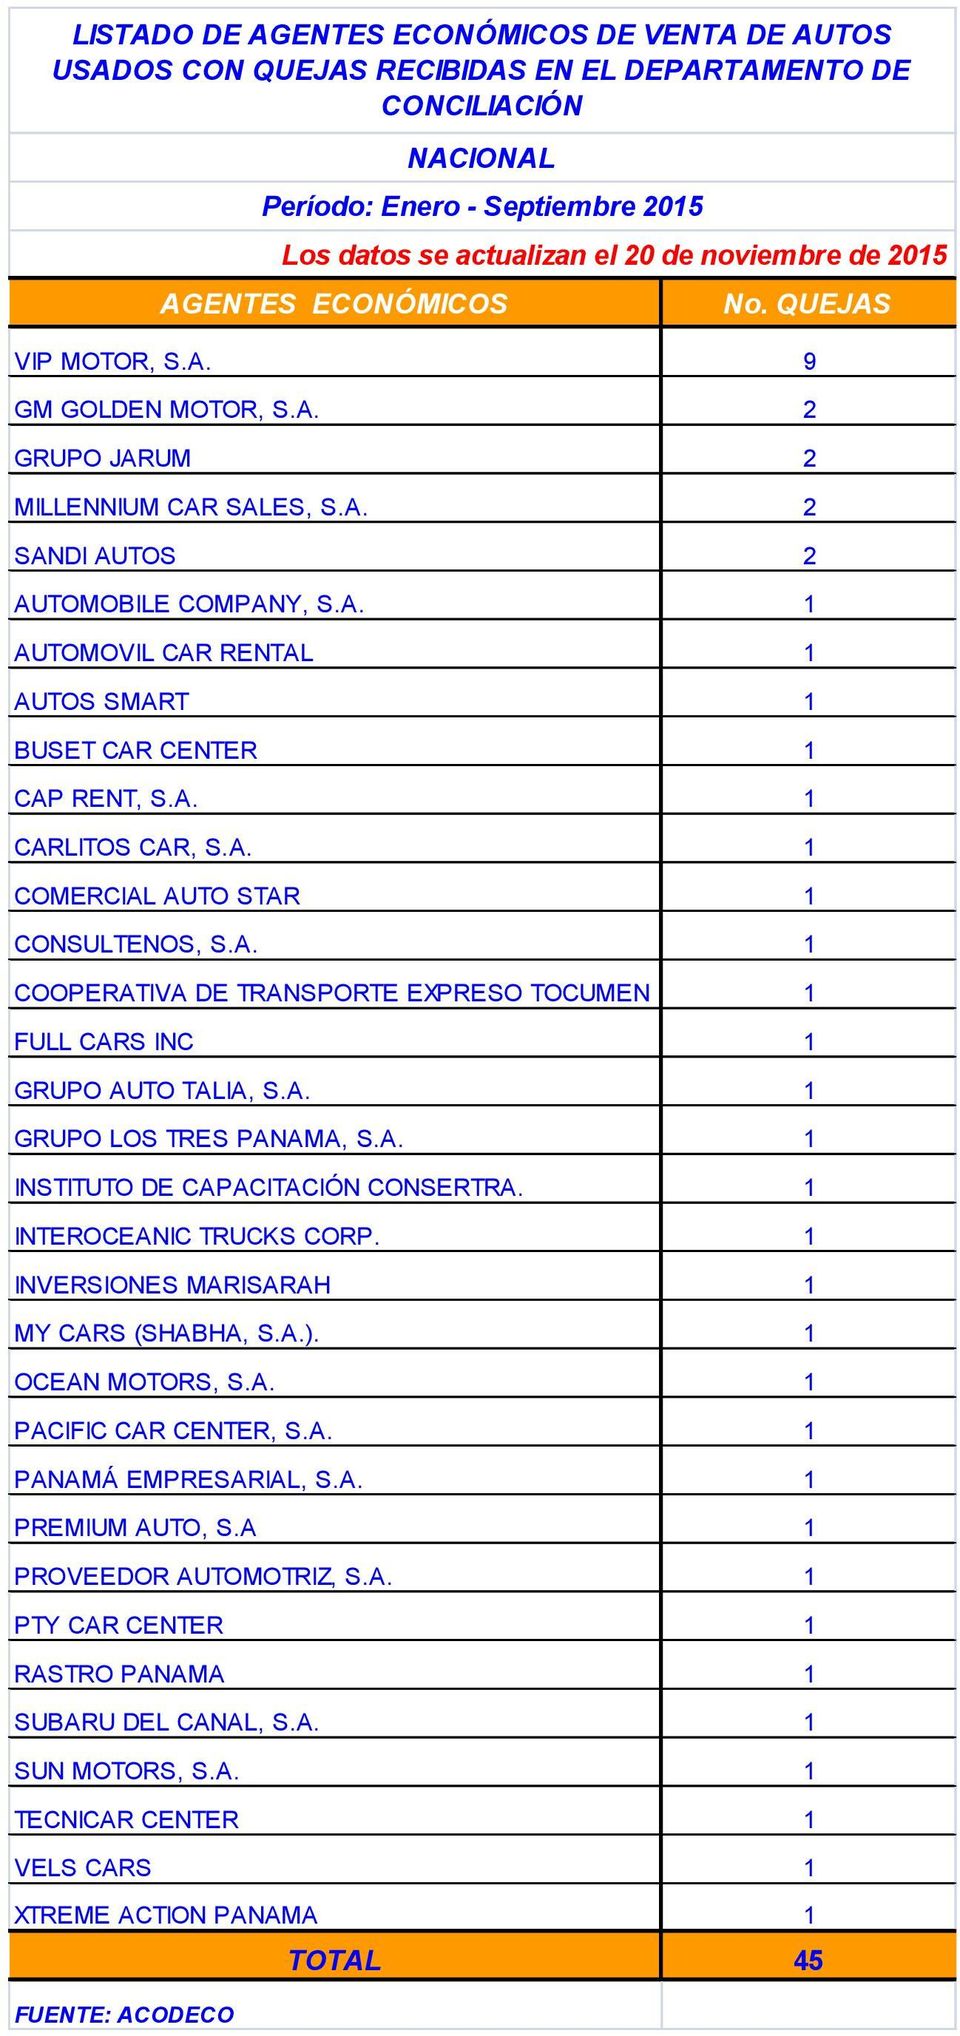 L. 1 FULL CARS INC 1 GRUPO AUTO TALIA, S.A. 1 GRUPO LOS TRES PANAMA, S.A. 1 INSTITUTO DE CAPACITACIÓN CONSERTRA. 1 INTEROCEANIC TRUCKS CORP. 1 INVERSIONES MARISARAH 1 MY CARS (SHABHA, S.A.).